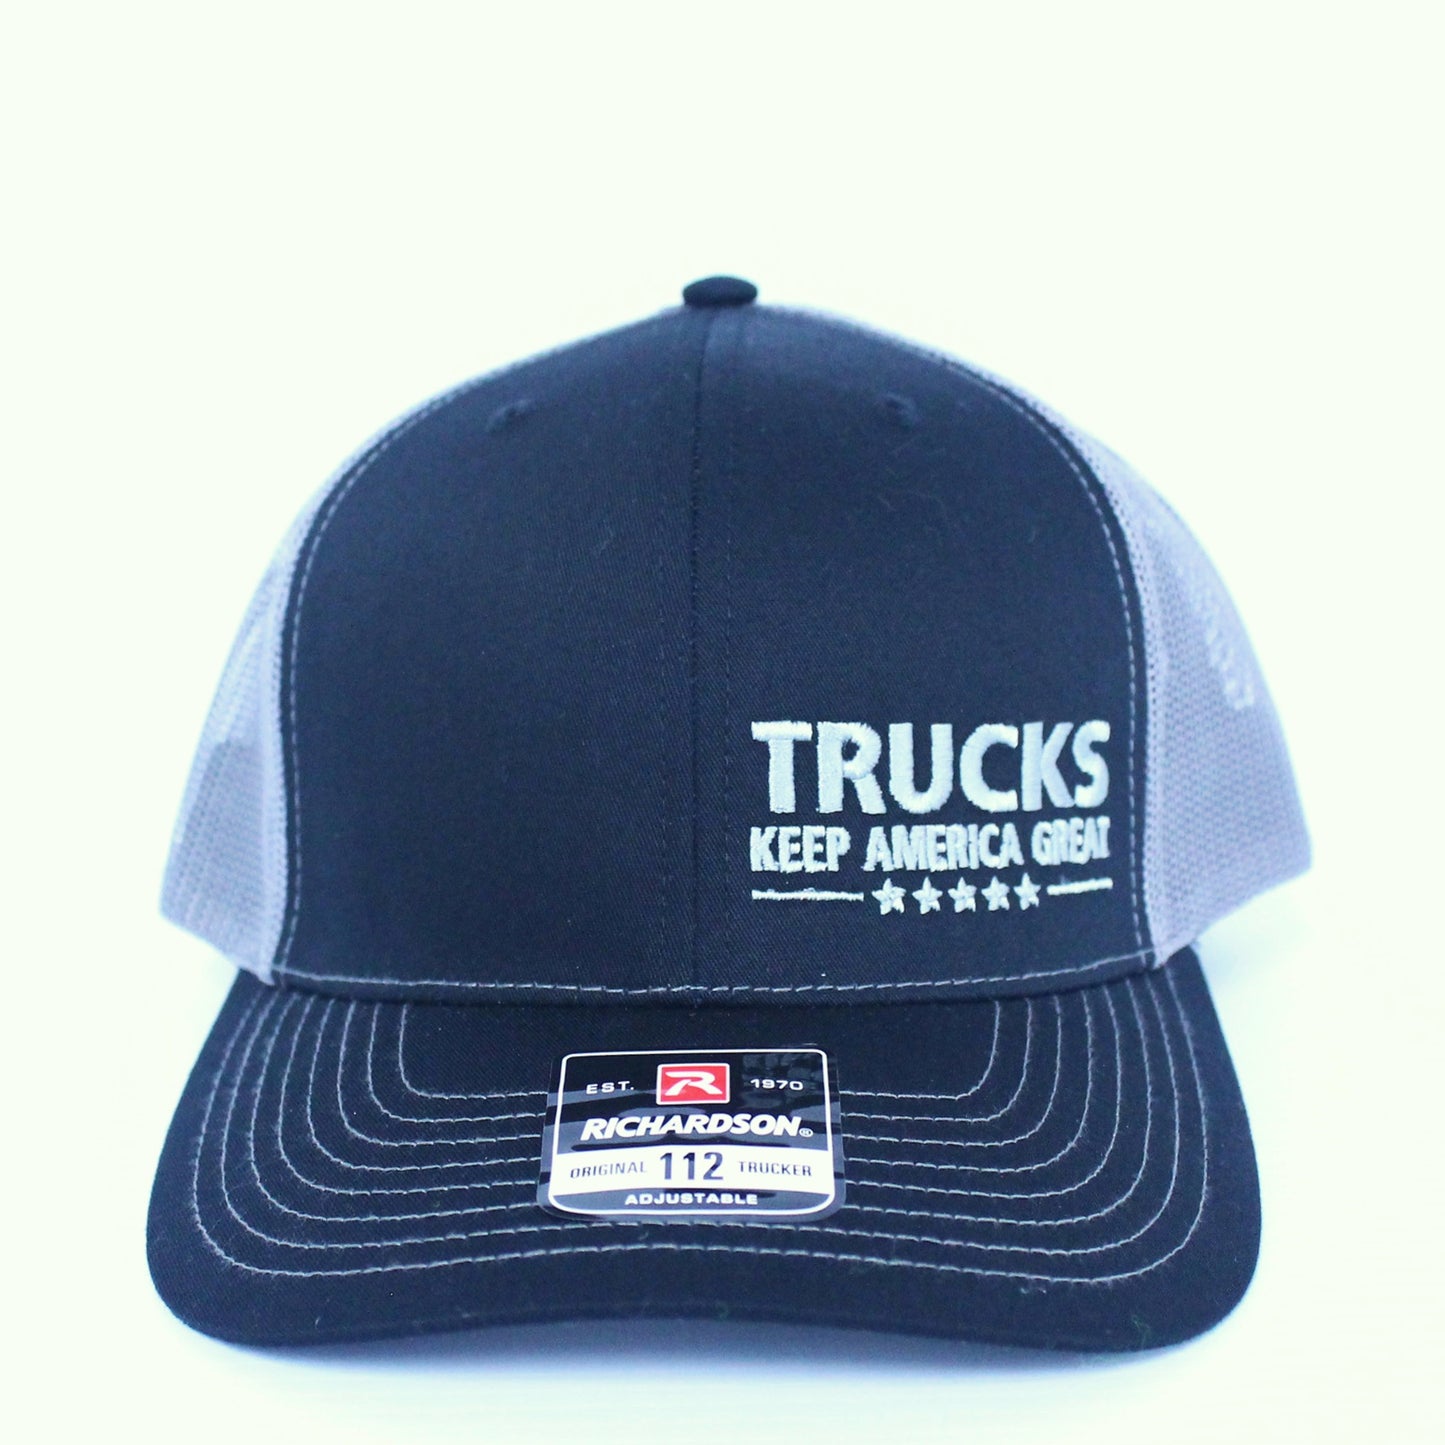 Trucks Keep America Great Hats